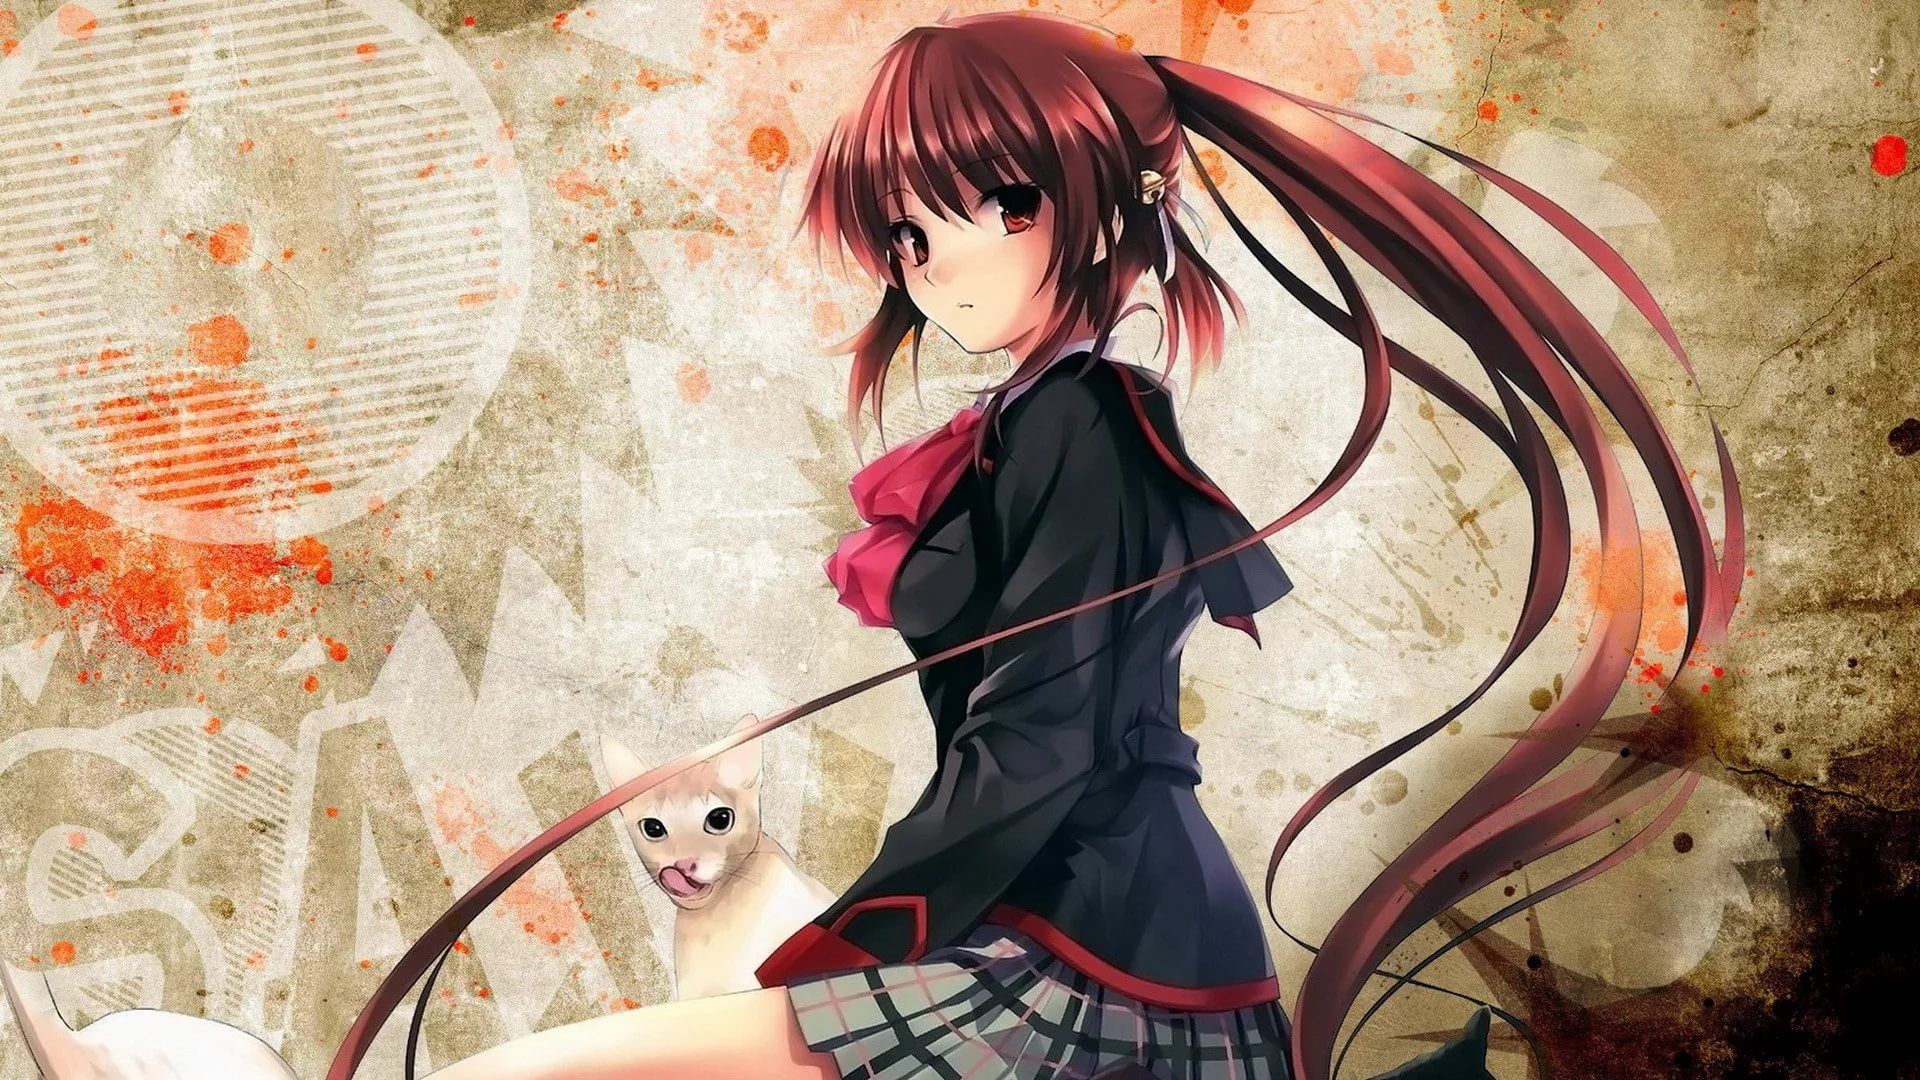 Cute Anime hd wallpaper download